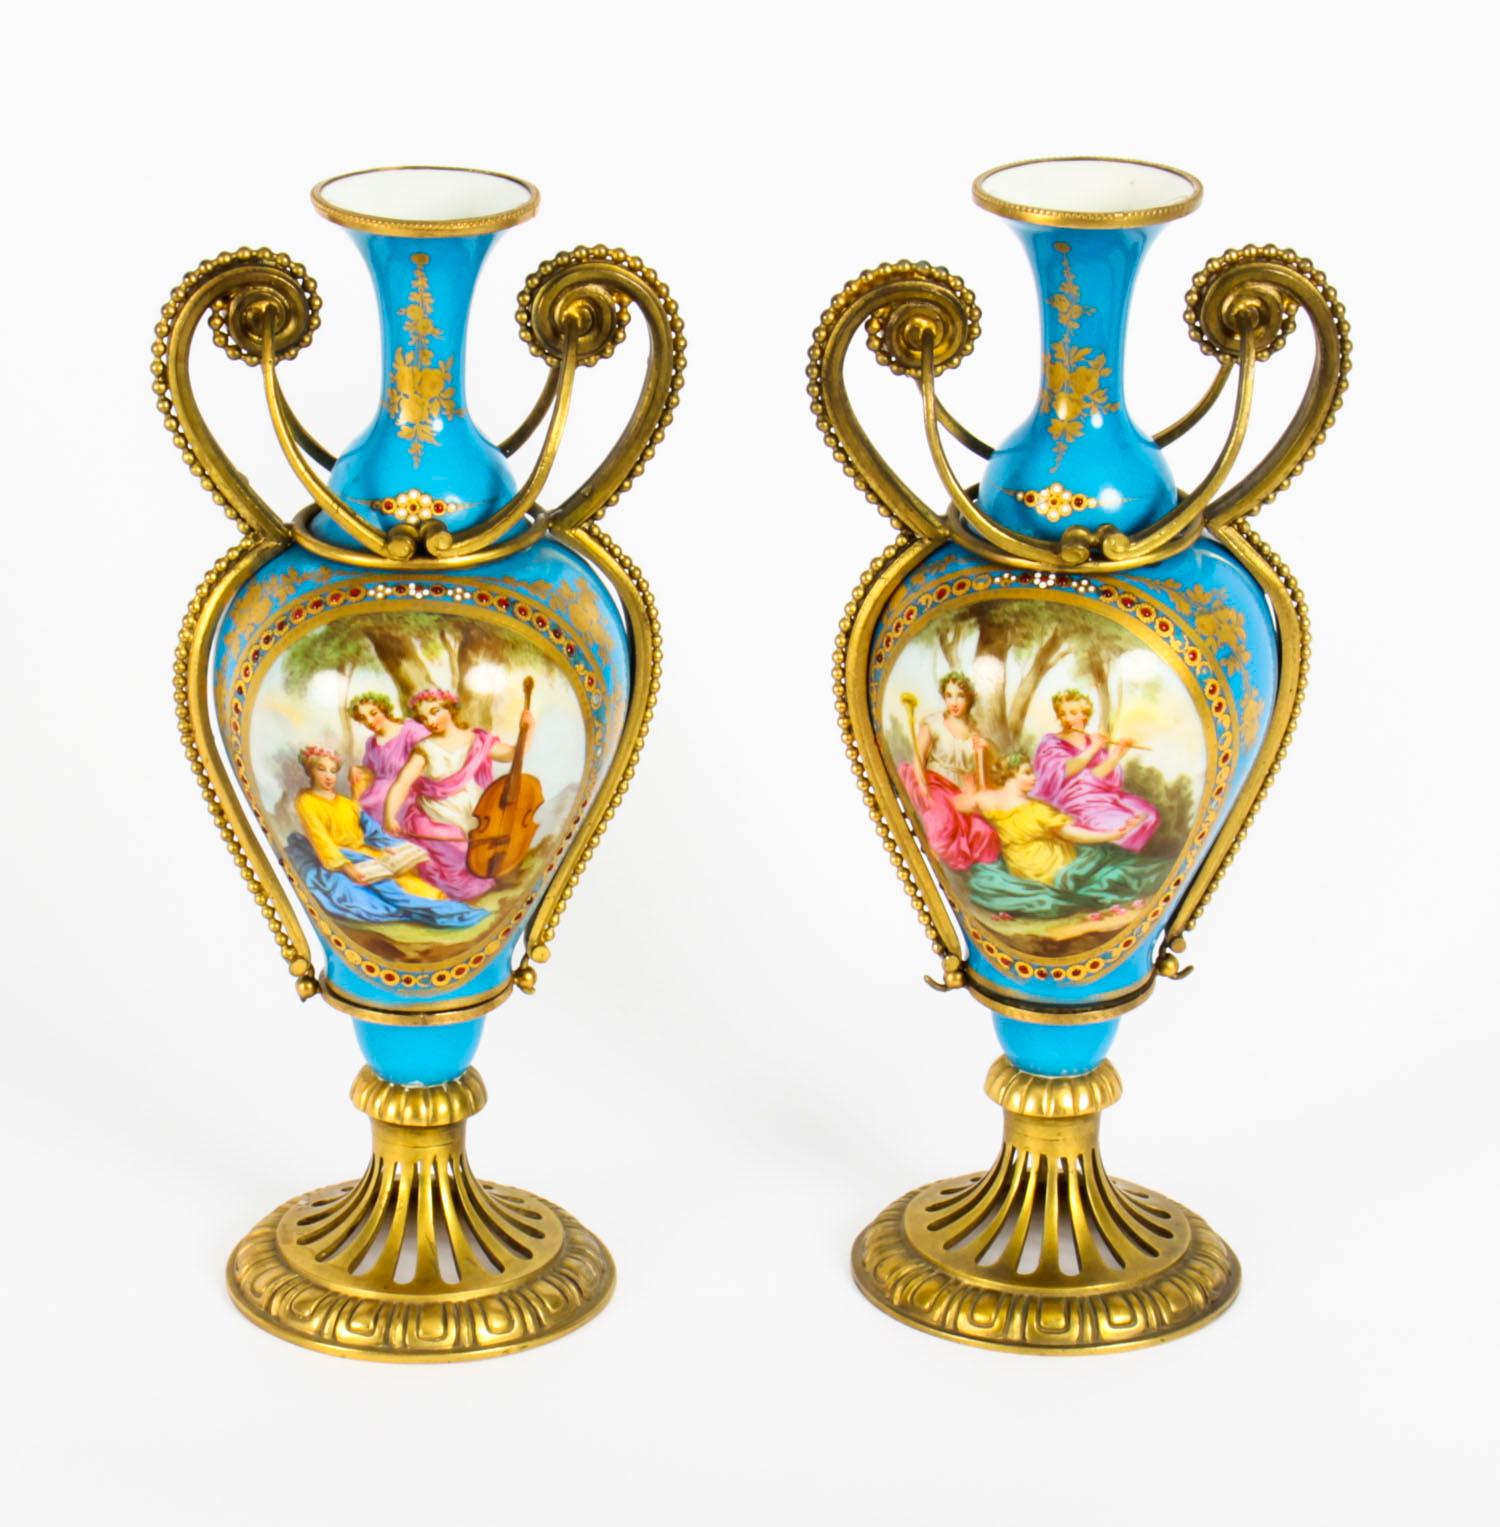 Antique Pair of French Ormolu Mounted Bleu Celeste Sèvres Vases, 19th Century For Sale 14